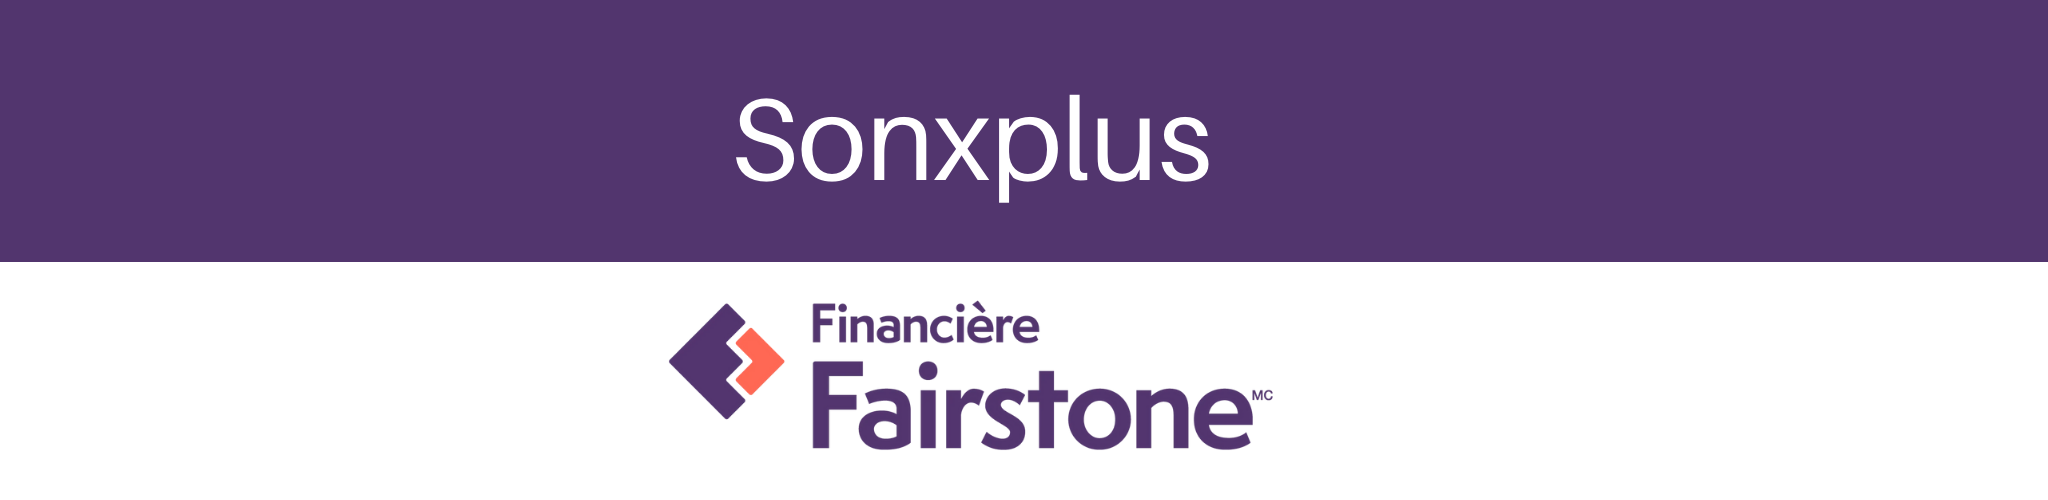 Financement Financière Fairstone | Sonxplus Thetford Mines